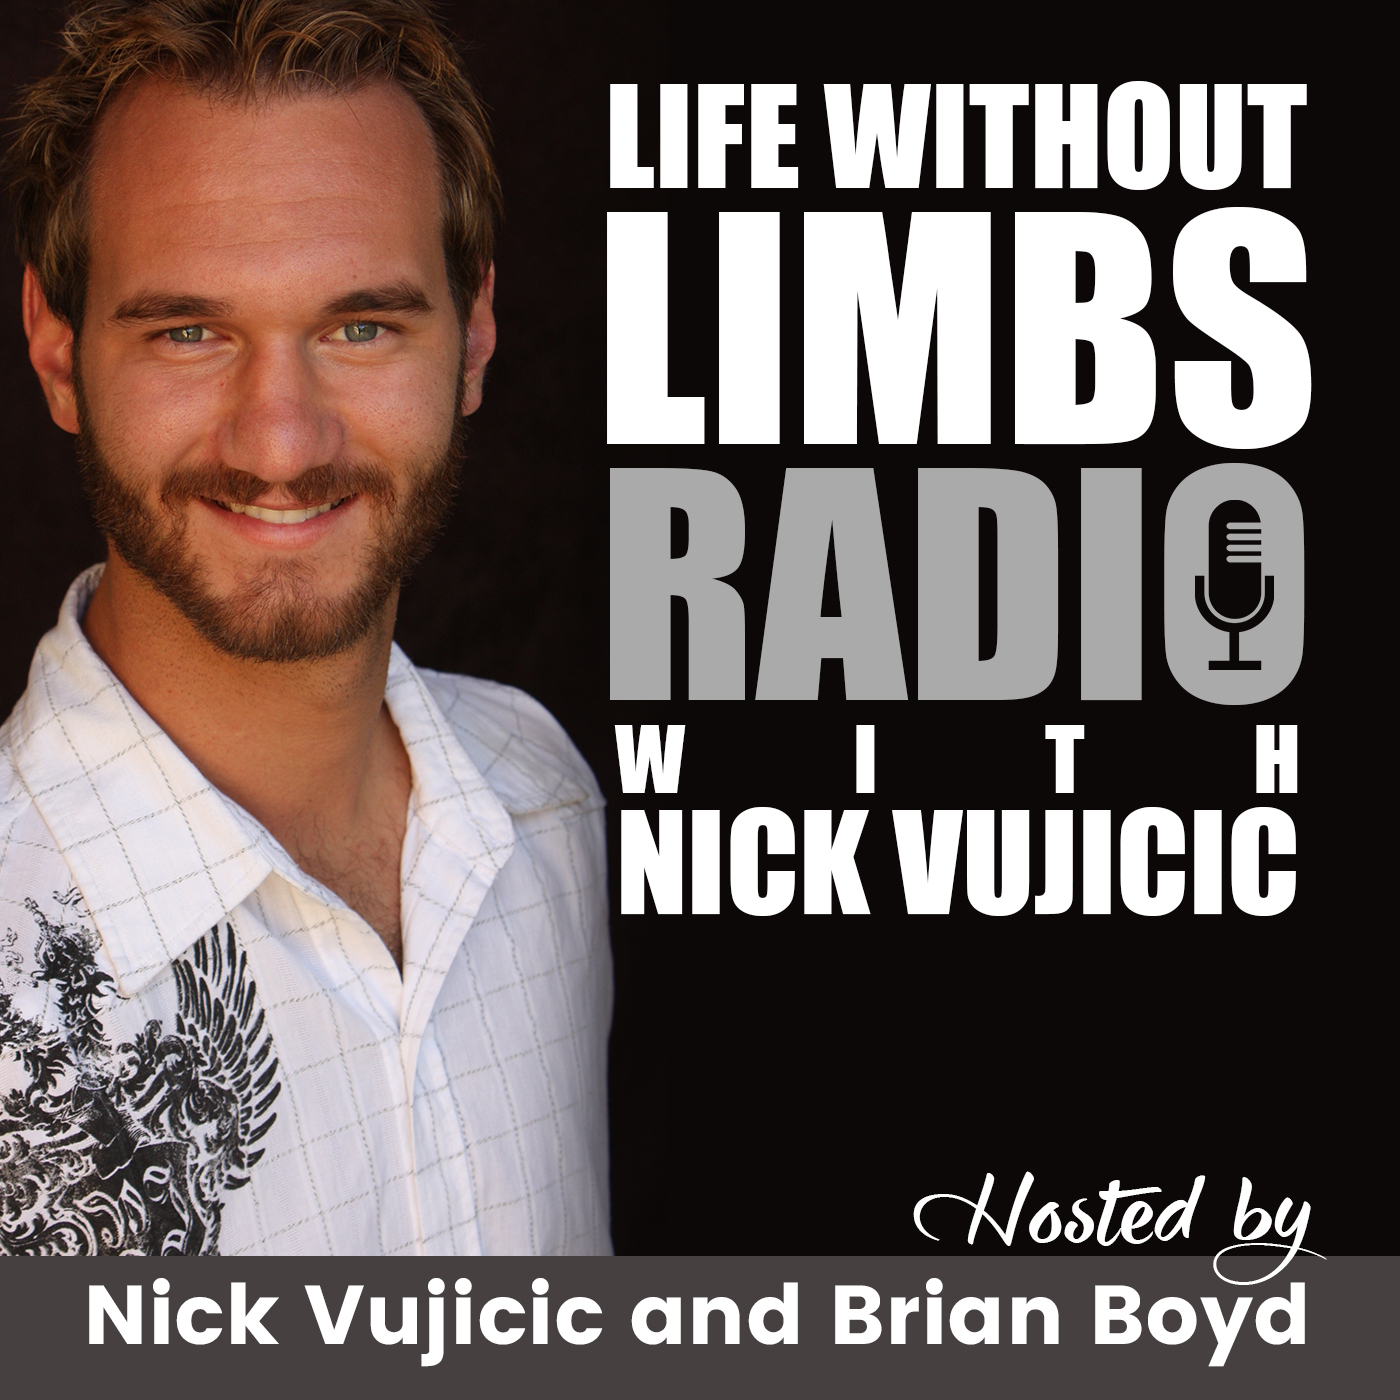 Why Do Bad Things Happen? - Nick Vujicic